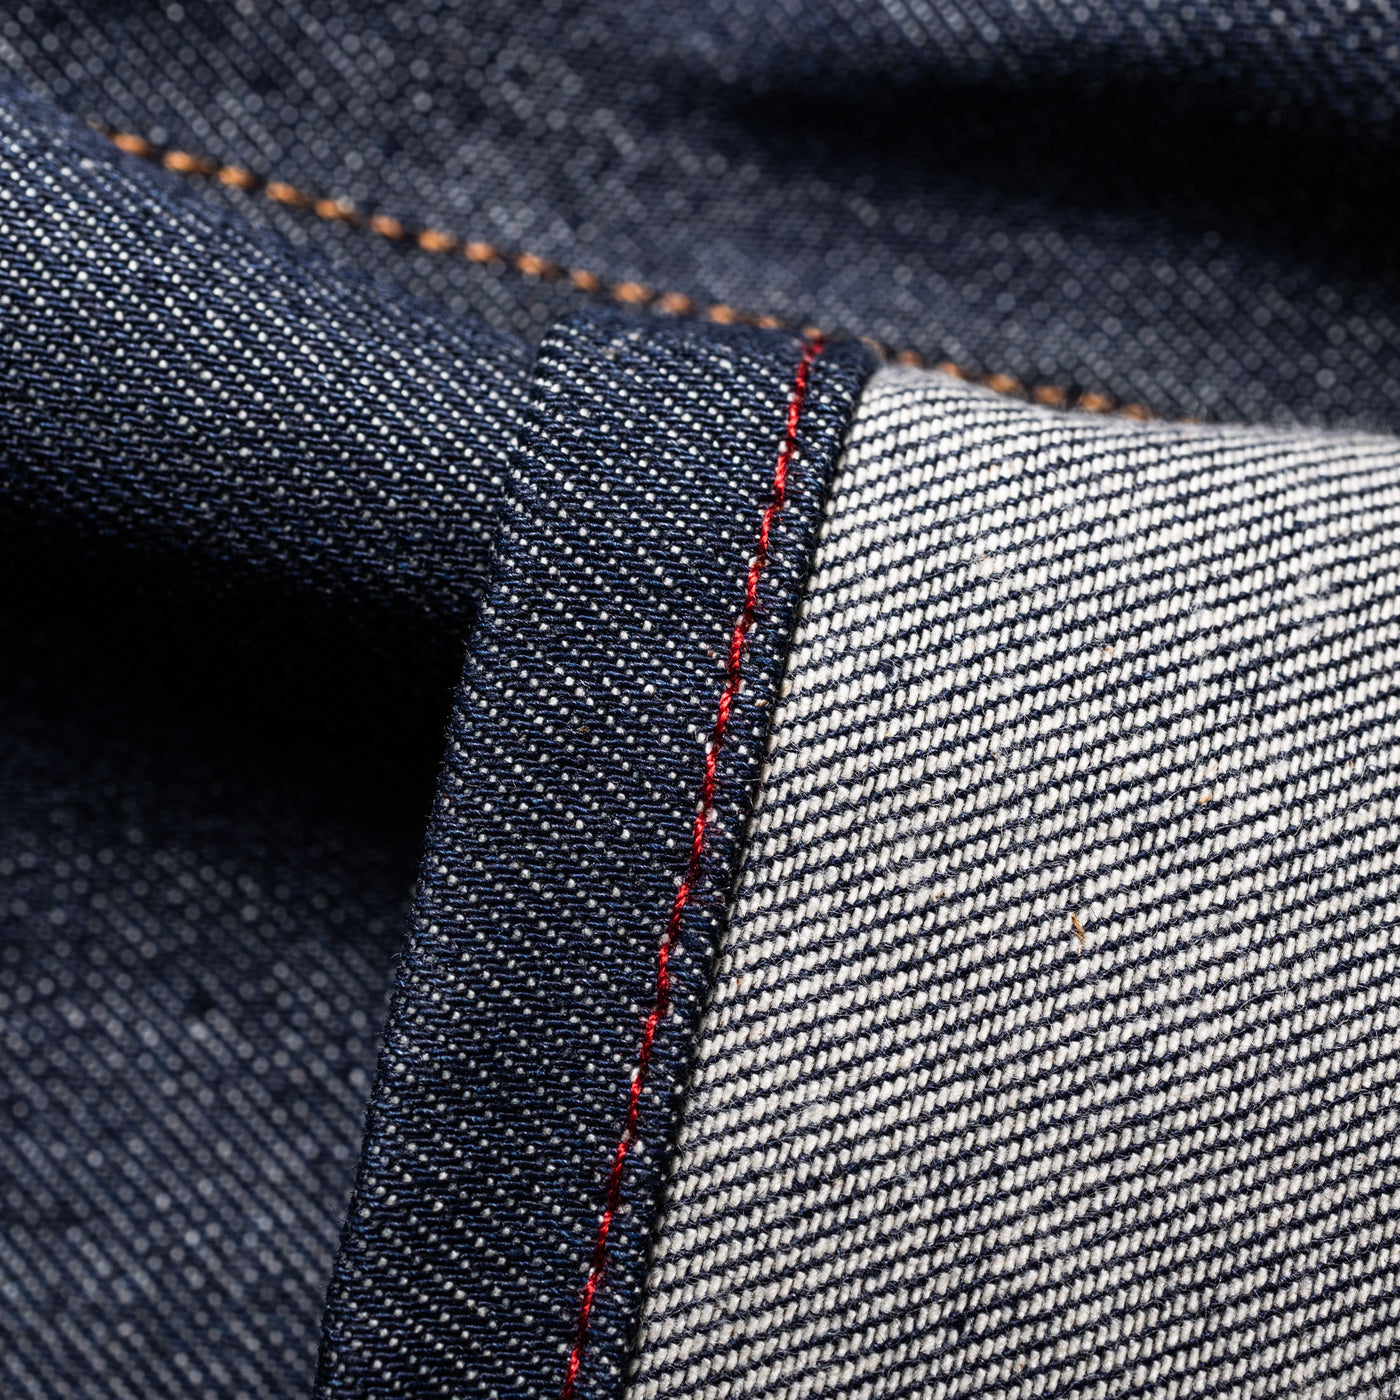 Iron & Resin - New Enduro Denim Jeans -